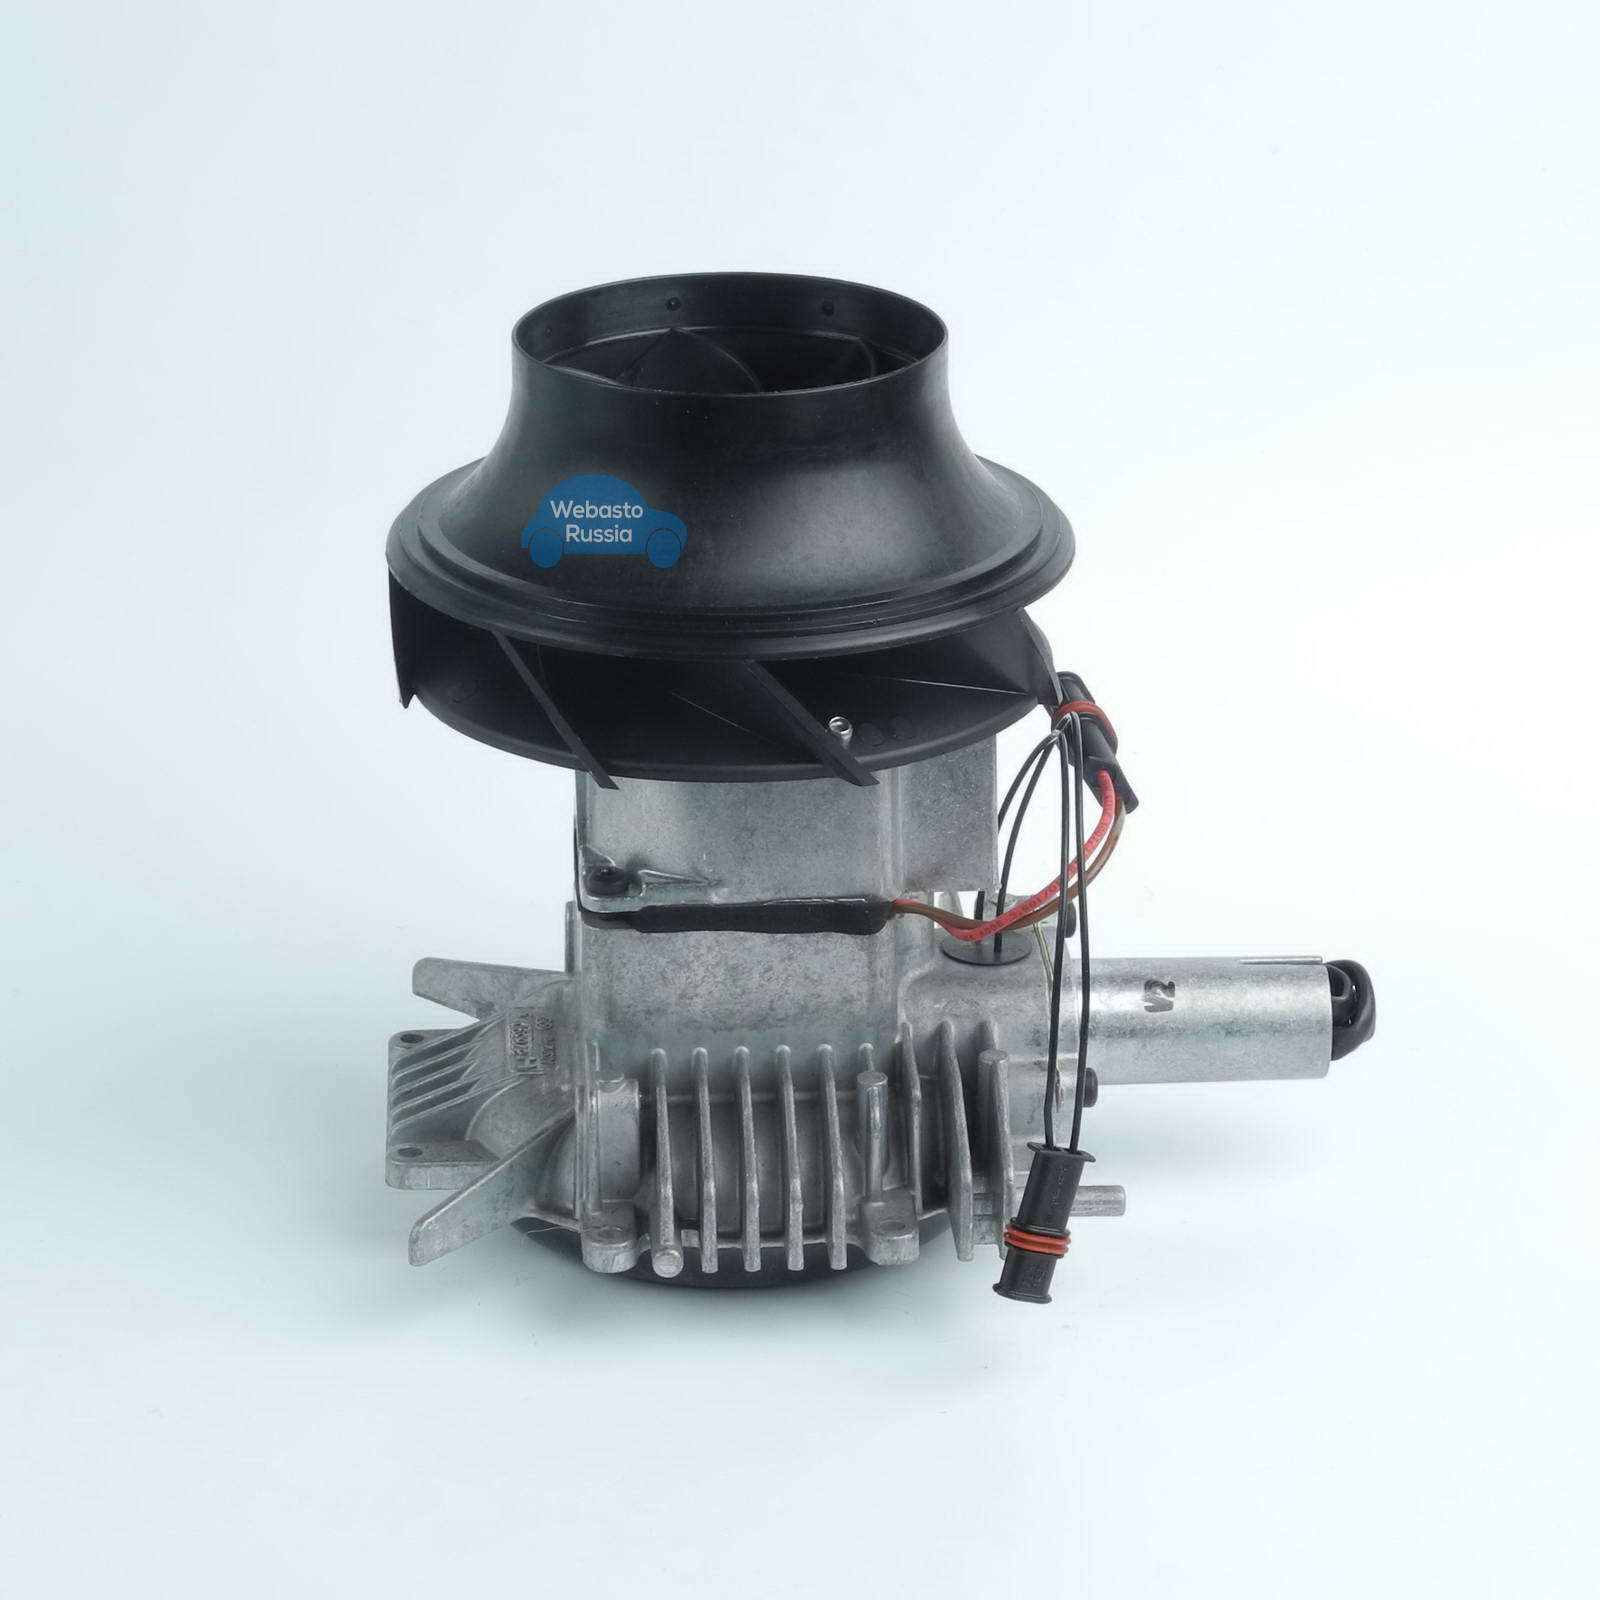 Air blower motor Gebläse Webasto Air Top 3500 ST 24V - buy online at a good  price